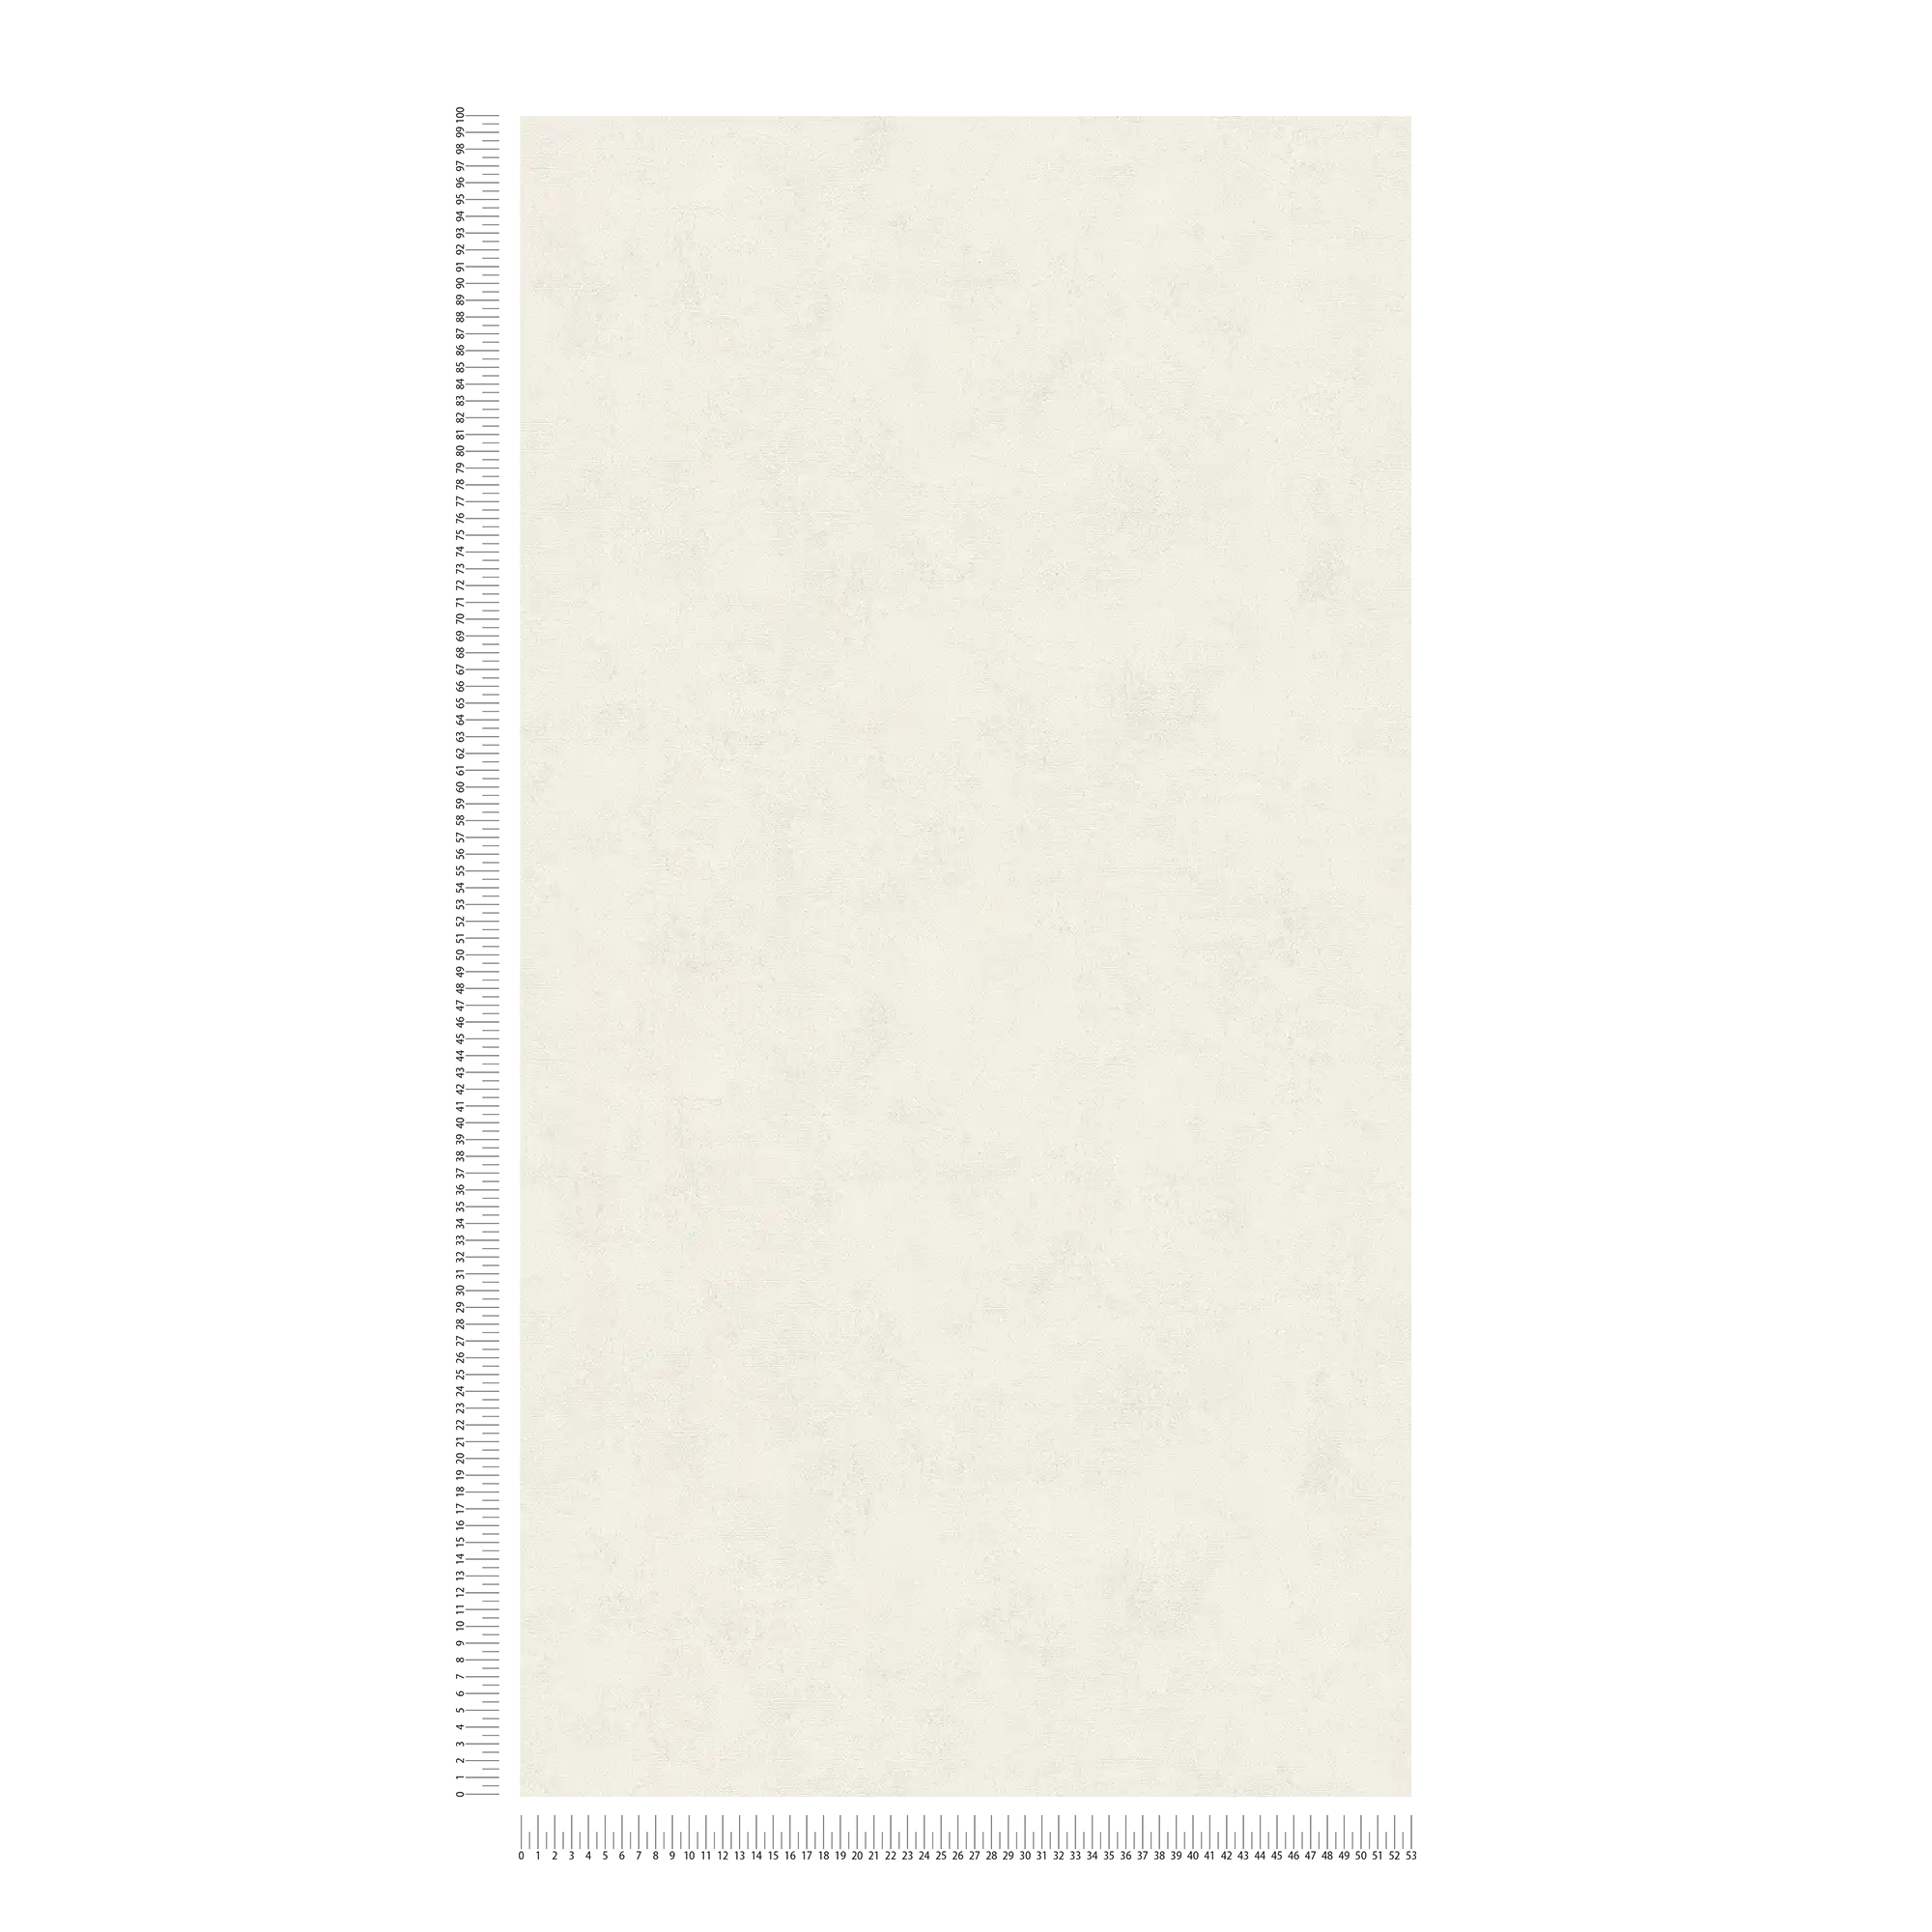             Carta da parati con struttura discreta - bianco
        